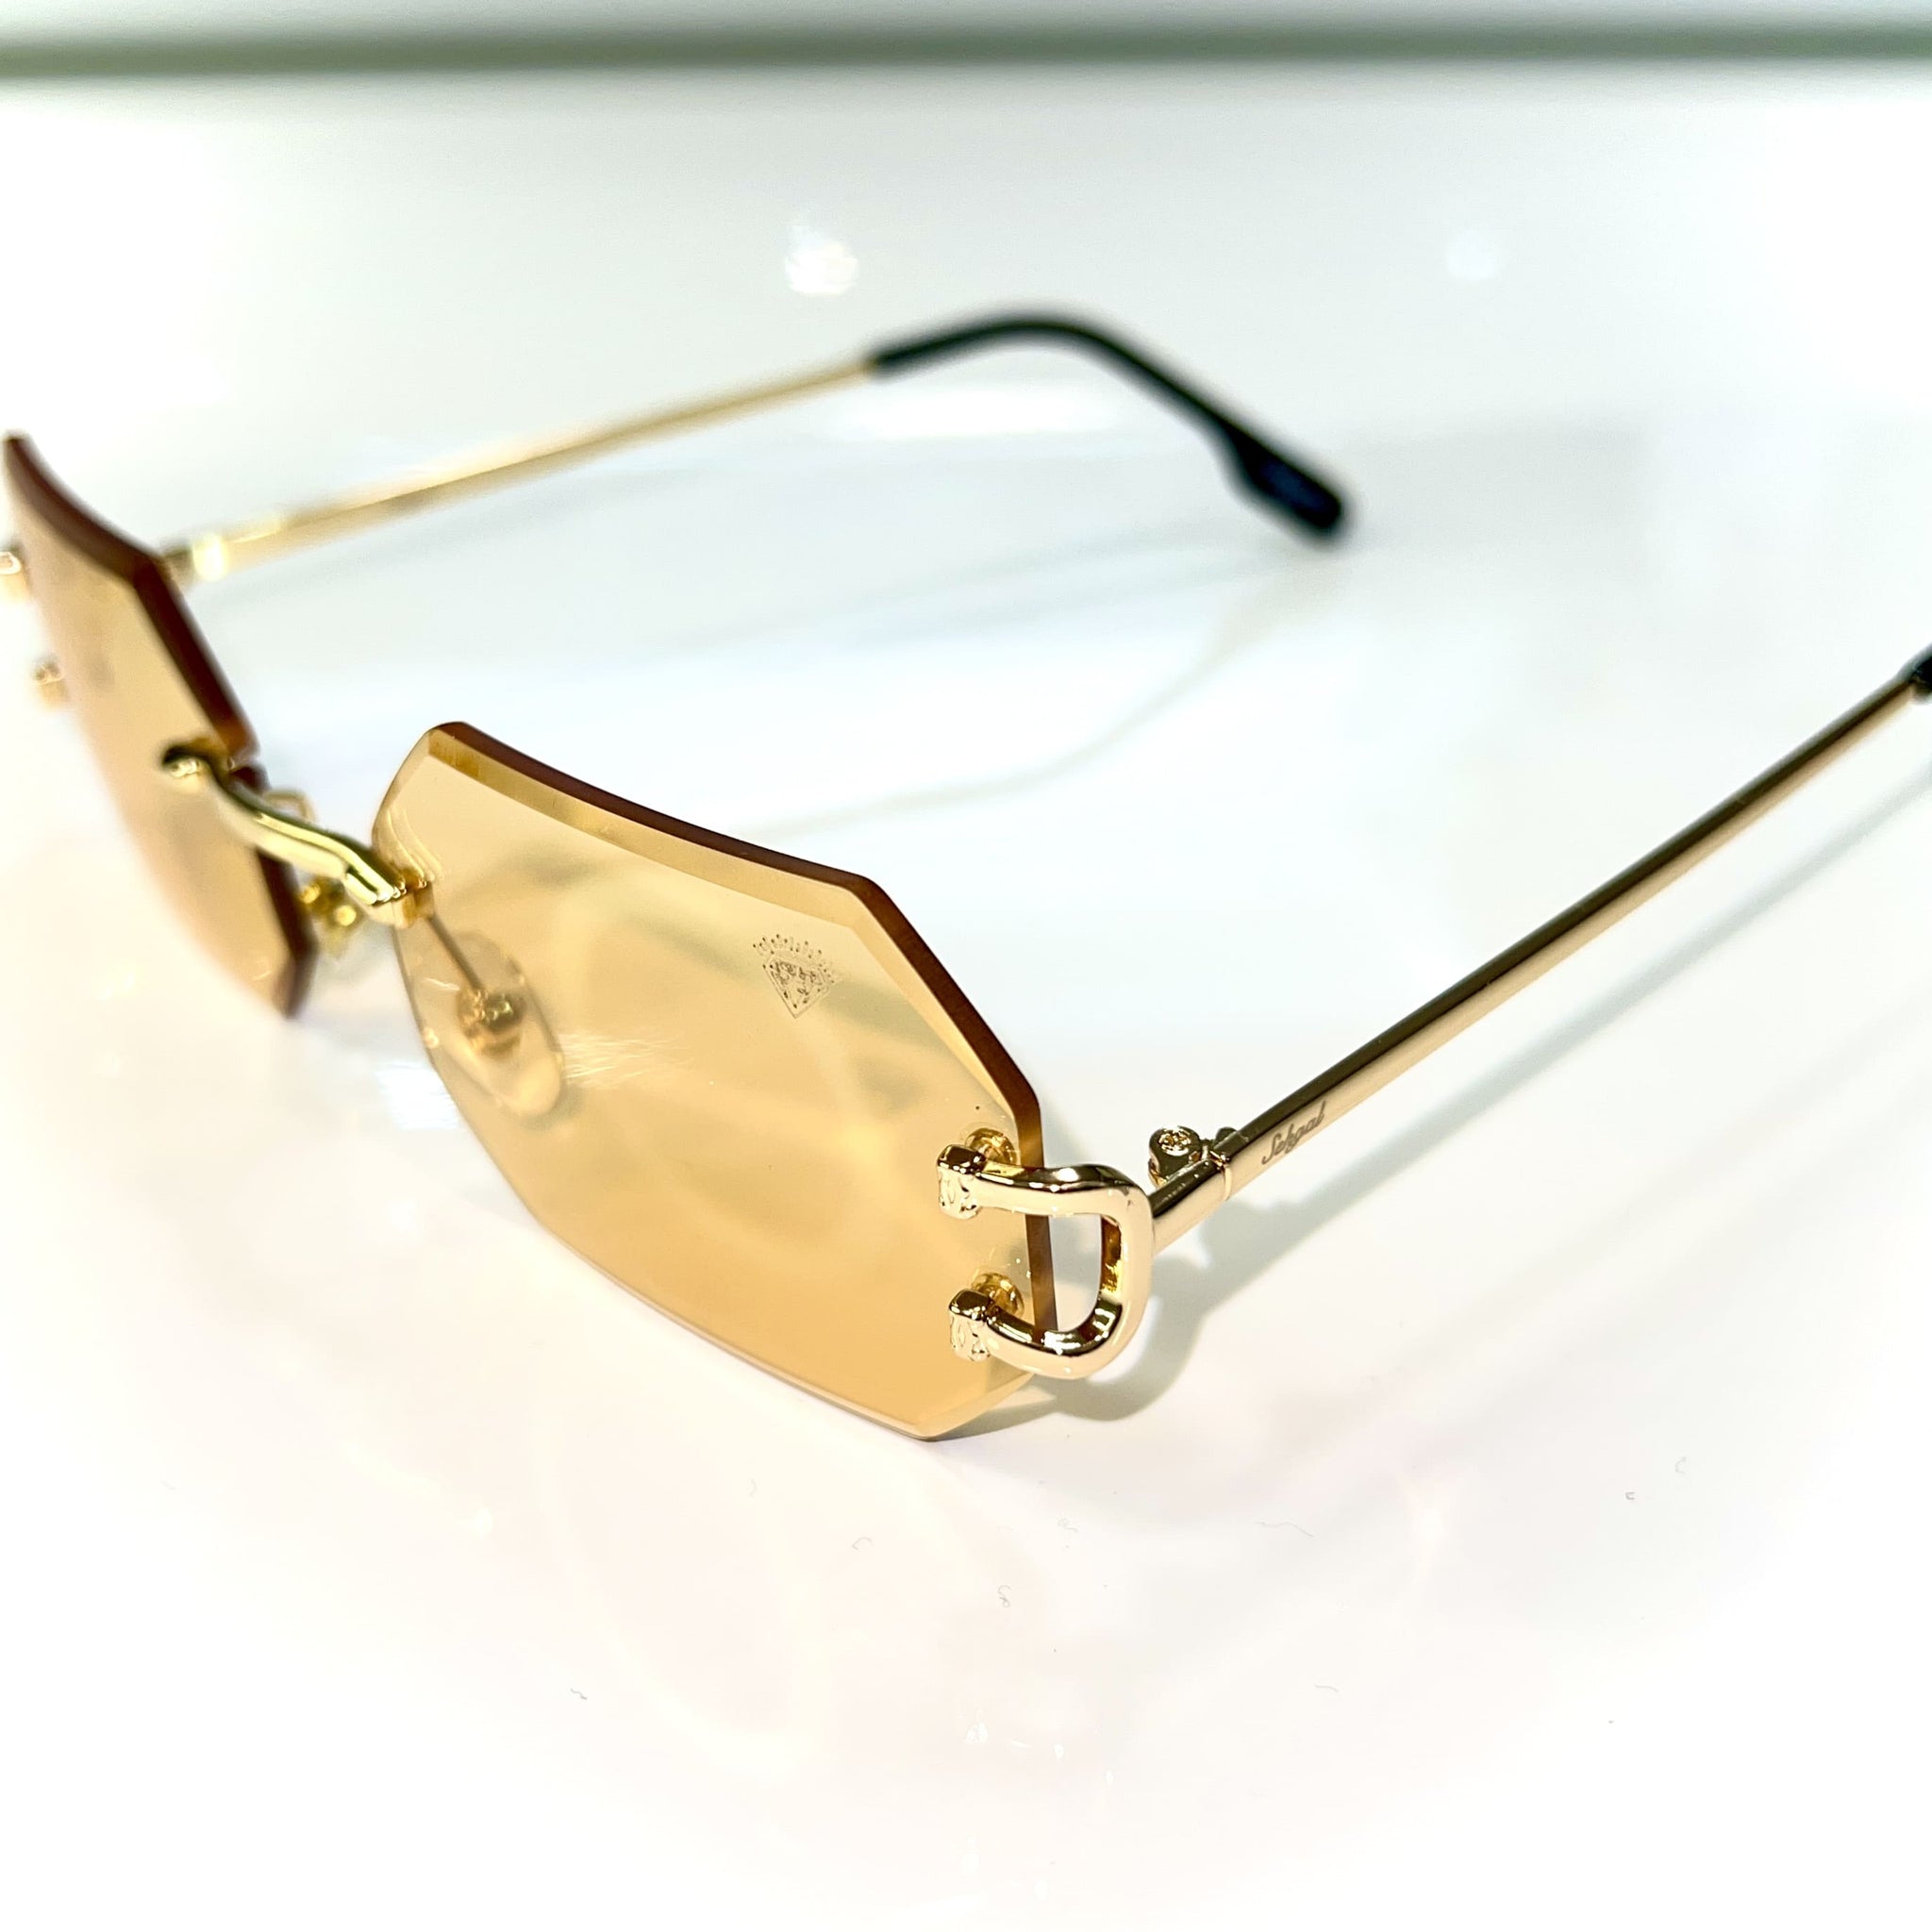 Sparkle Glasses - Diamond Cut - 14k gold plated - Caramel Shade - Sehgal Glasses